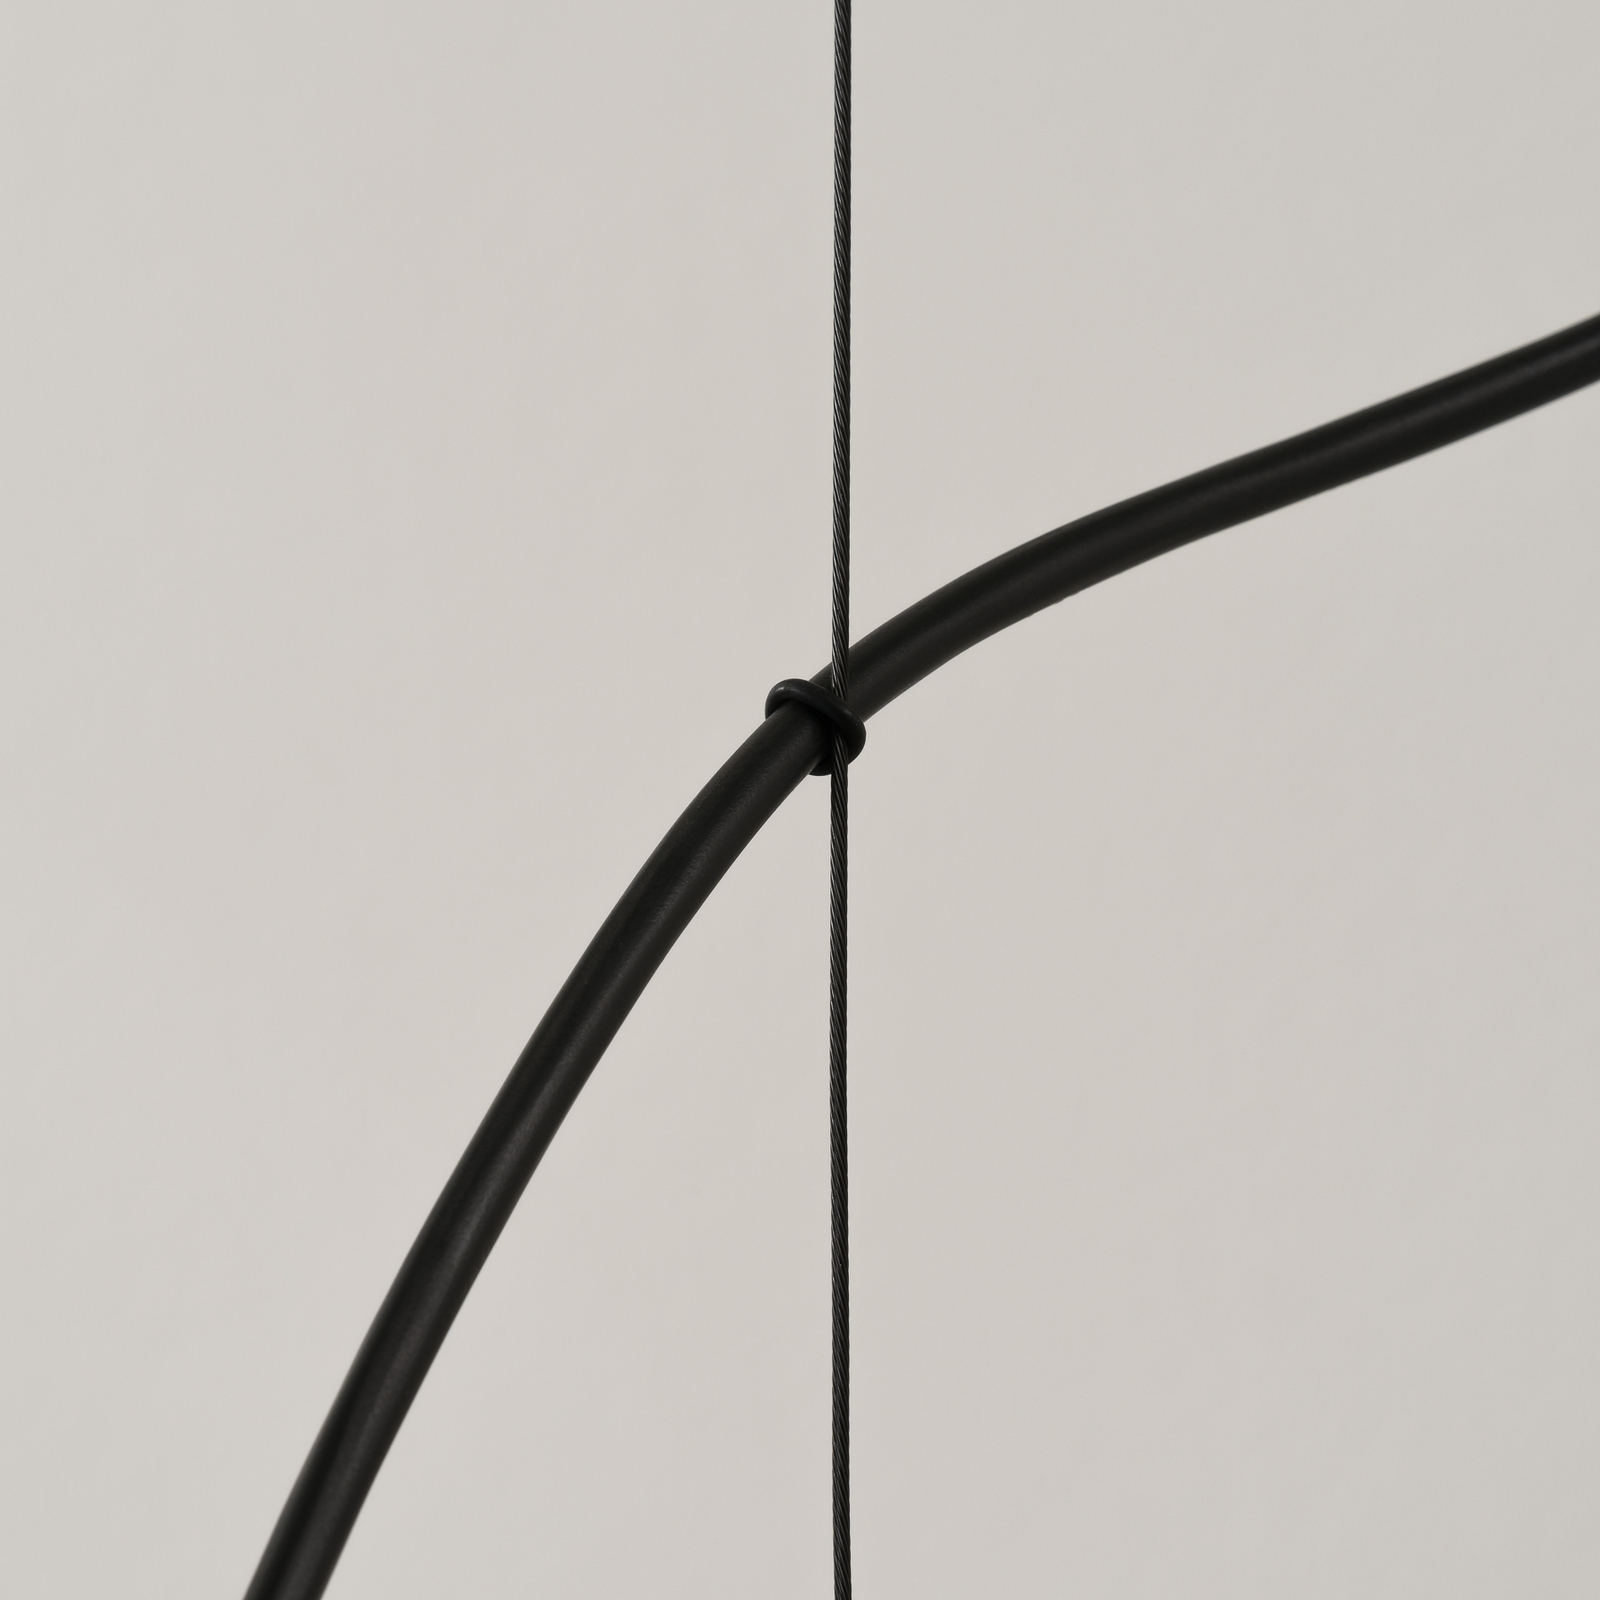 Milan Wire hanglamp Ø 24 cm nerts kleurig